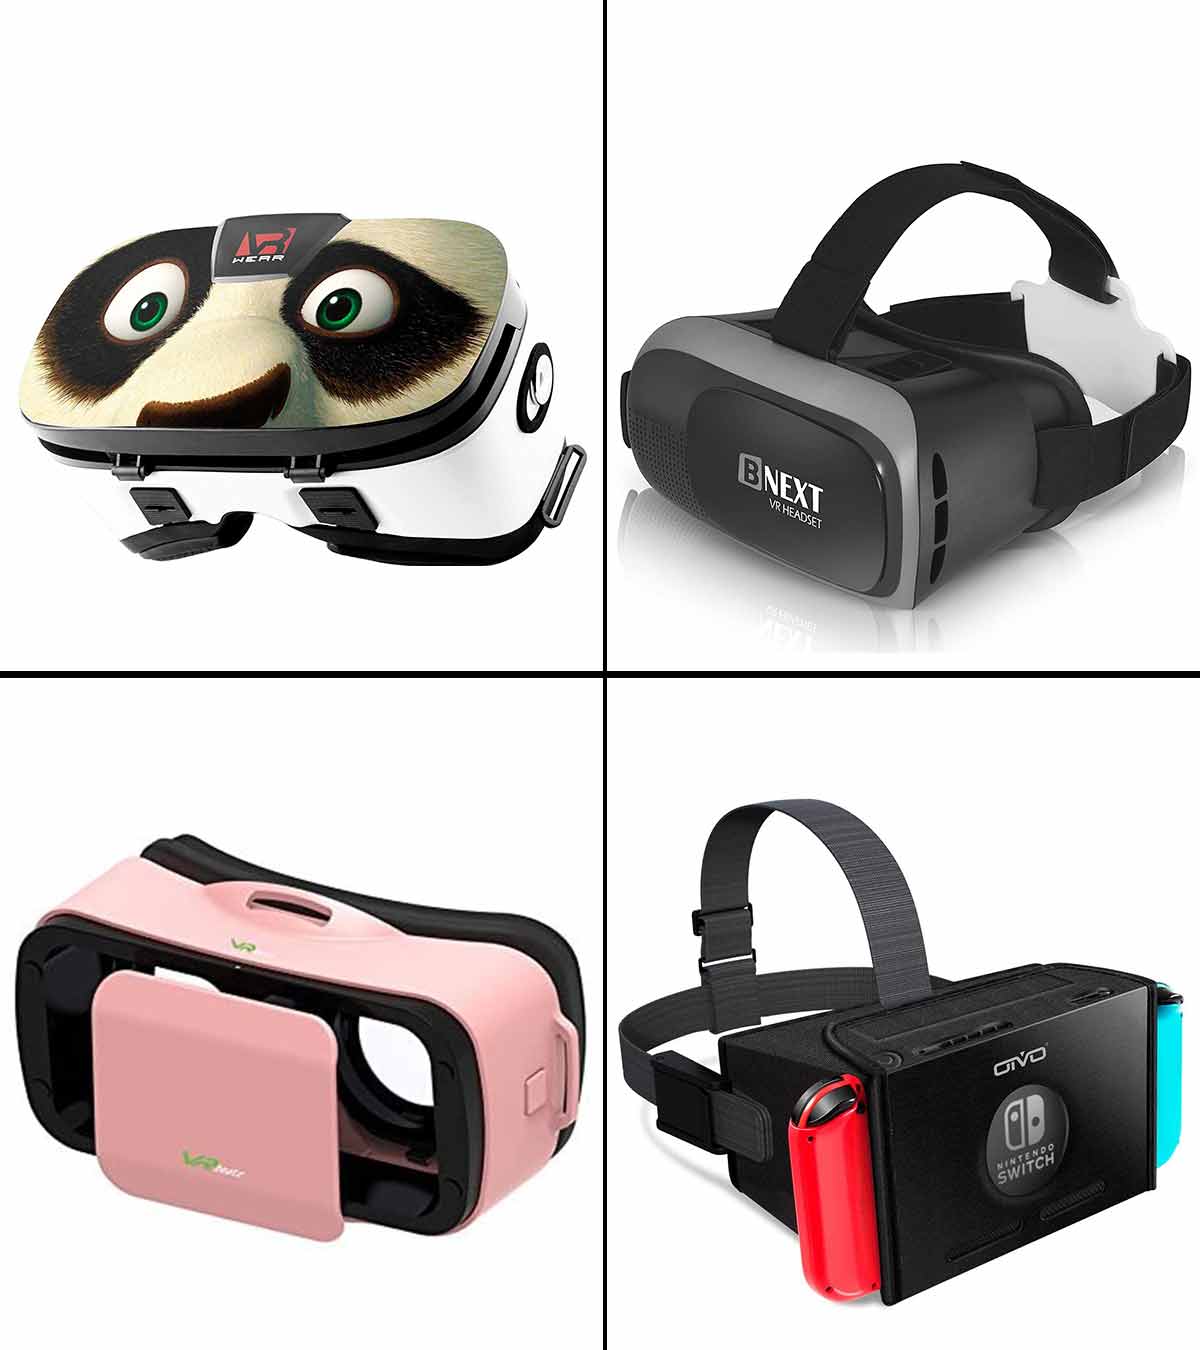 Top 15 Best Multiplayer VR Games On Oculus Quest - Summer 2021